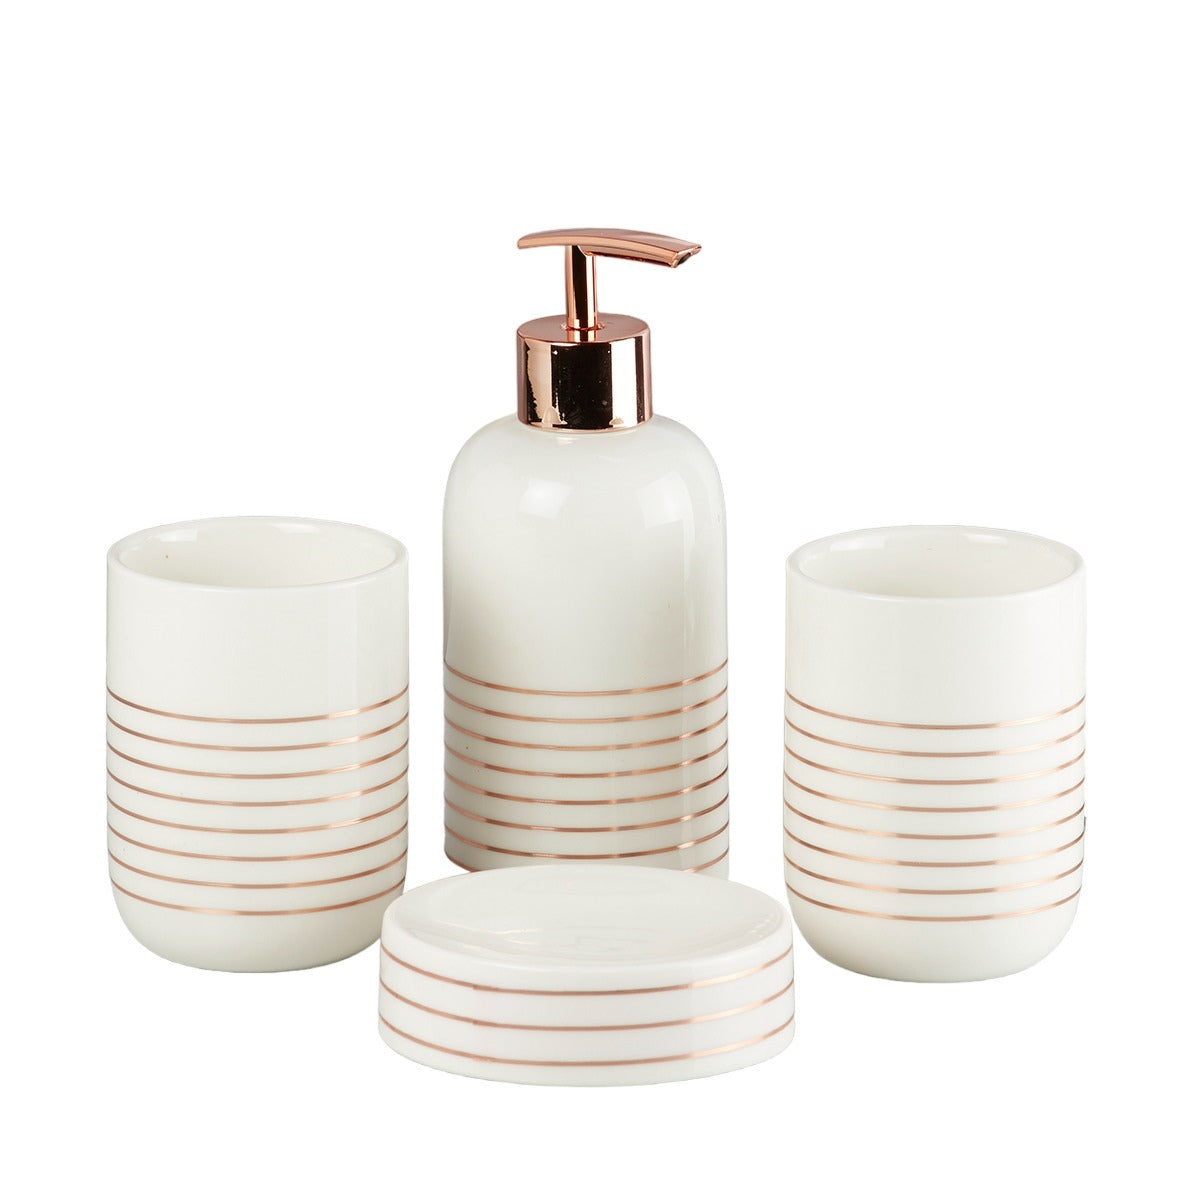 Ceramic Bathroom Accessories Set of 4 Bath Set with Soap Dispenser (9736)